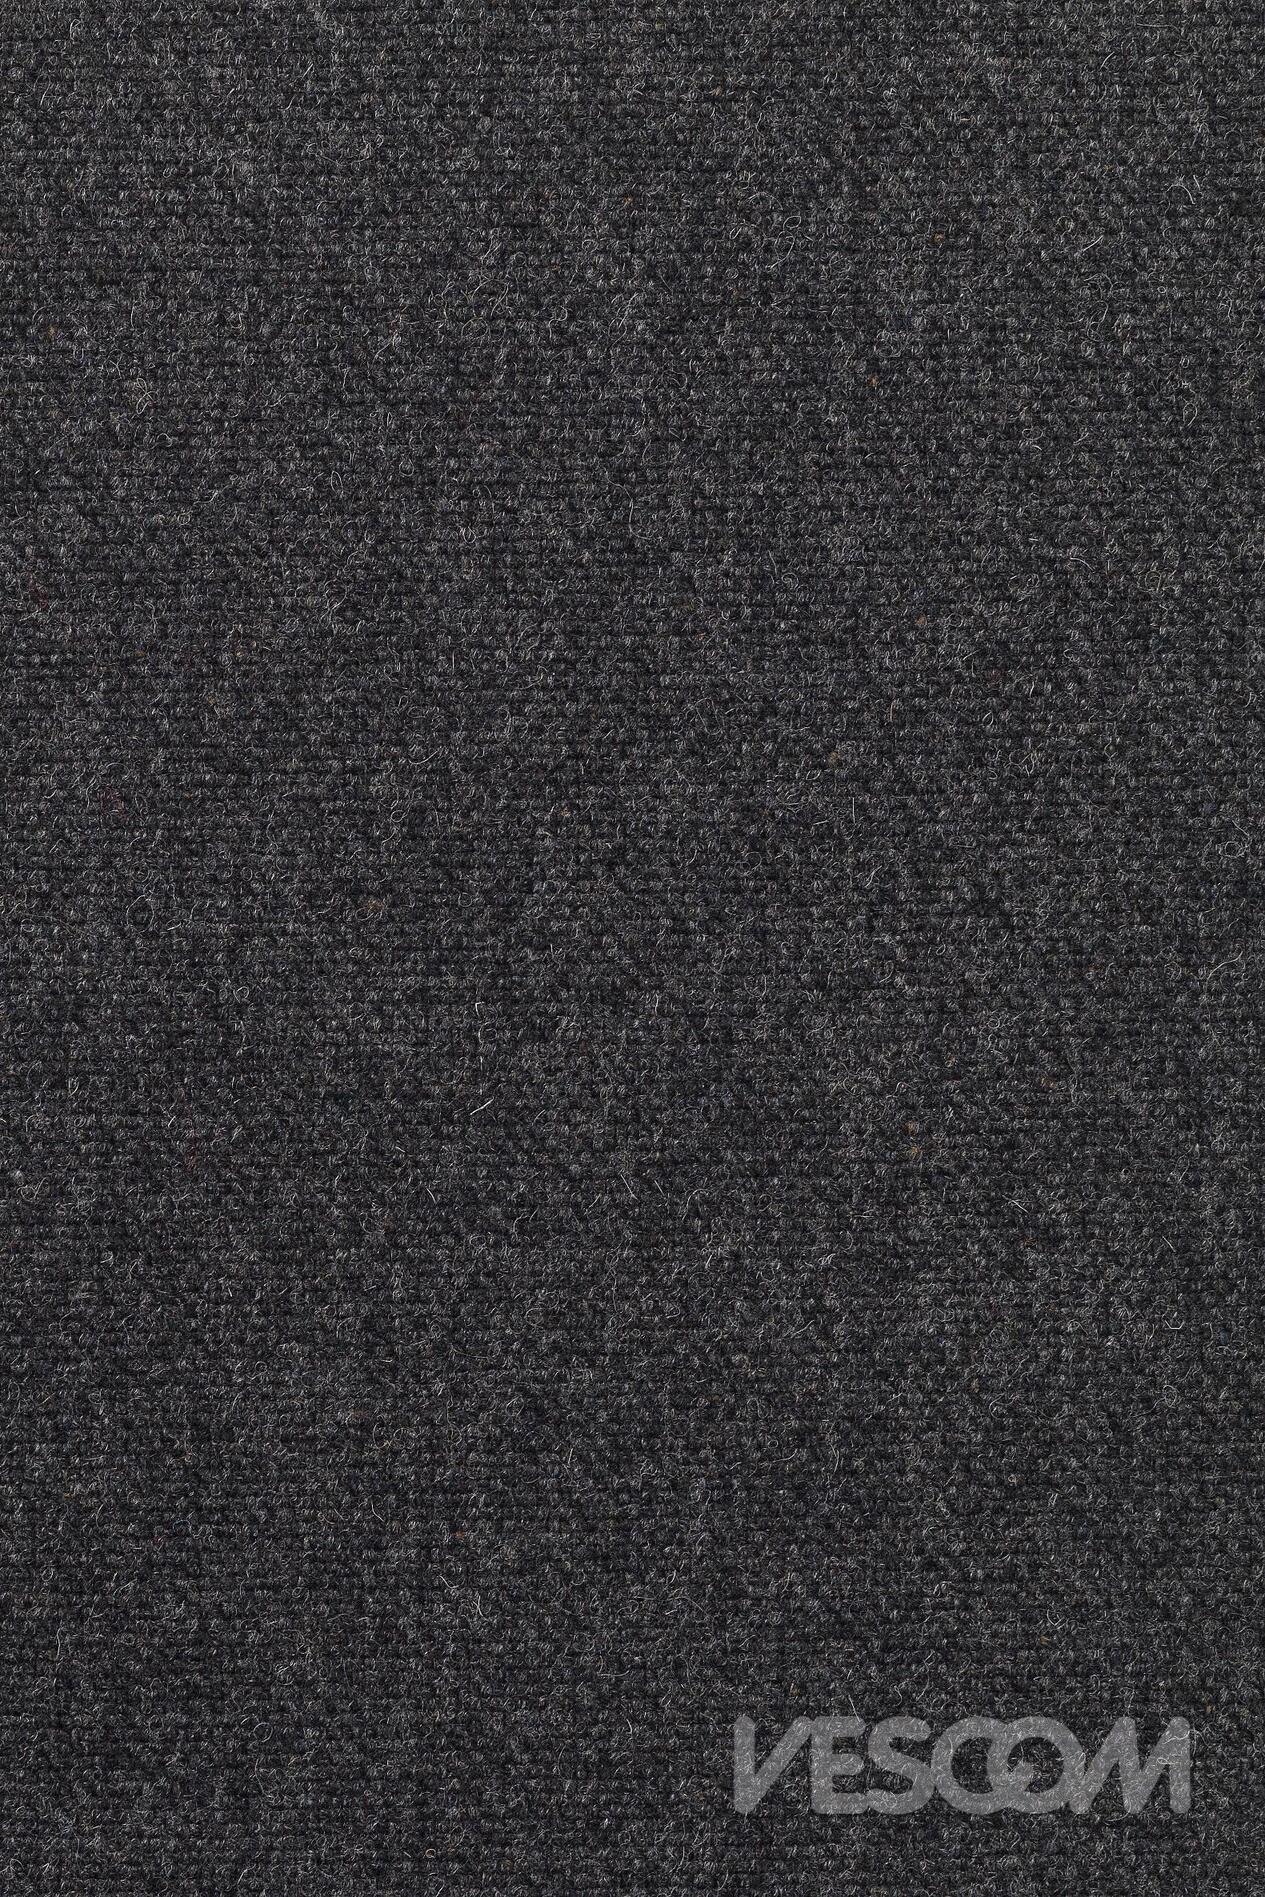 Vescom Wolin Upholstery Fabric 7050.10